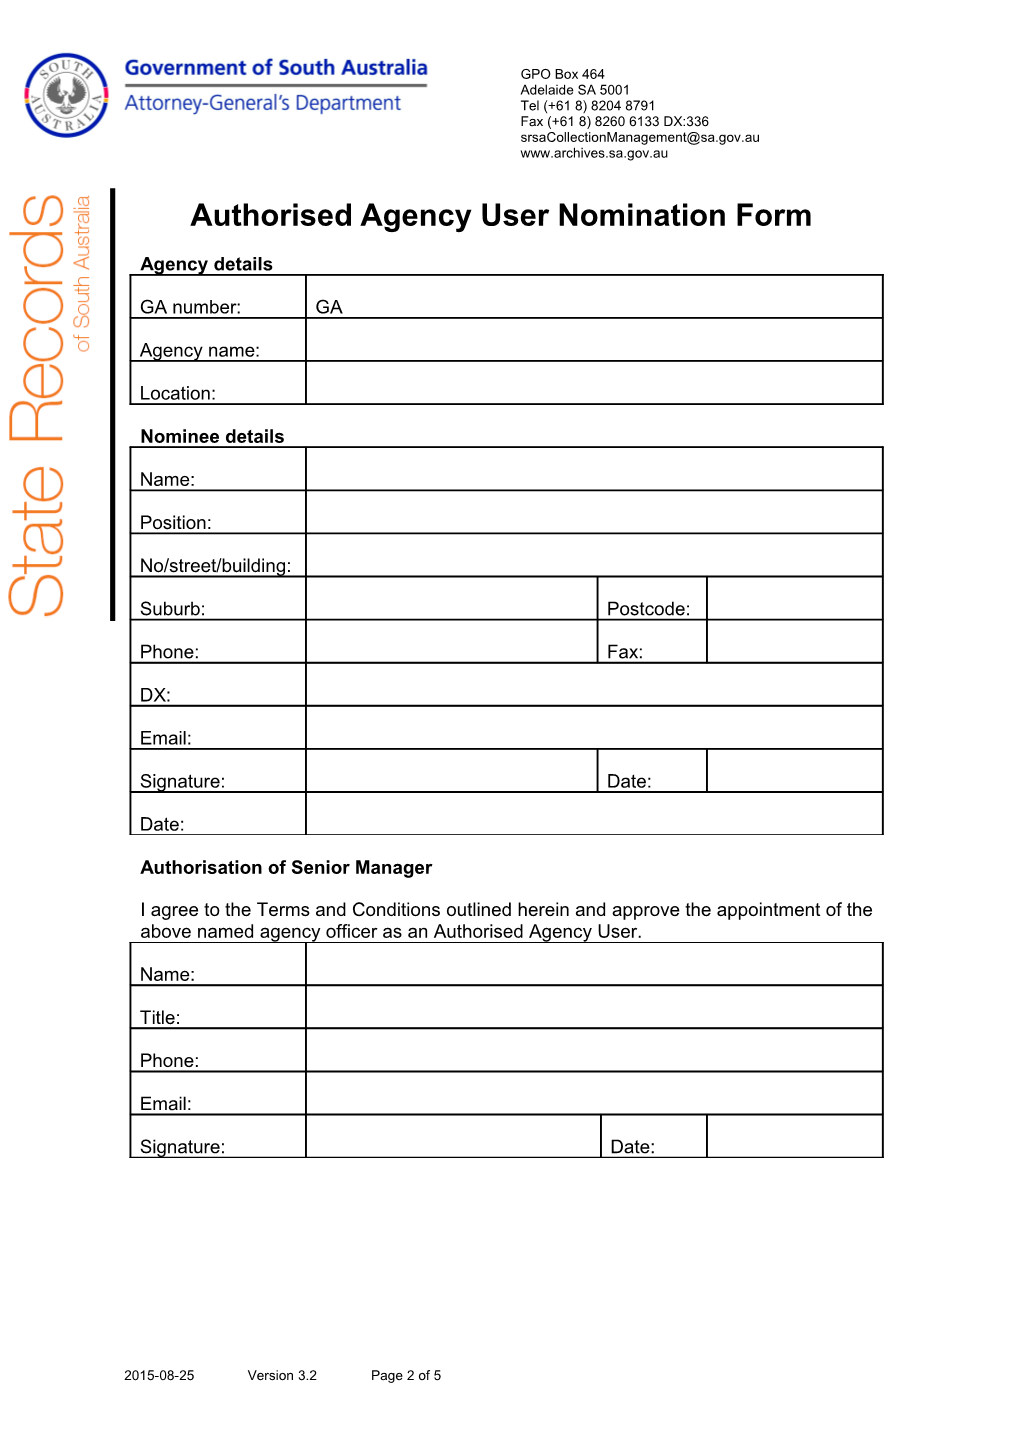 20150825 Authorised Agency User Nomination Form Final V3.2